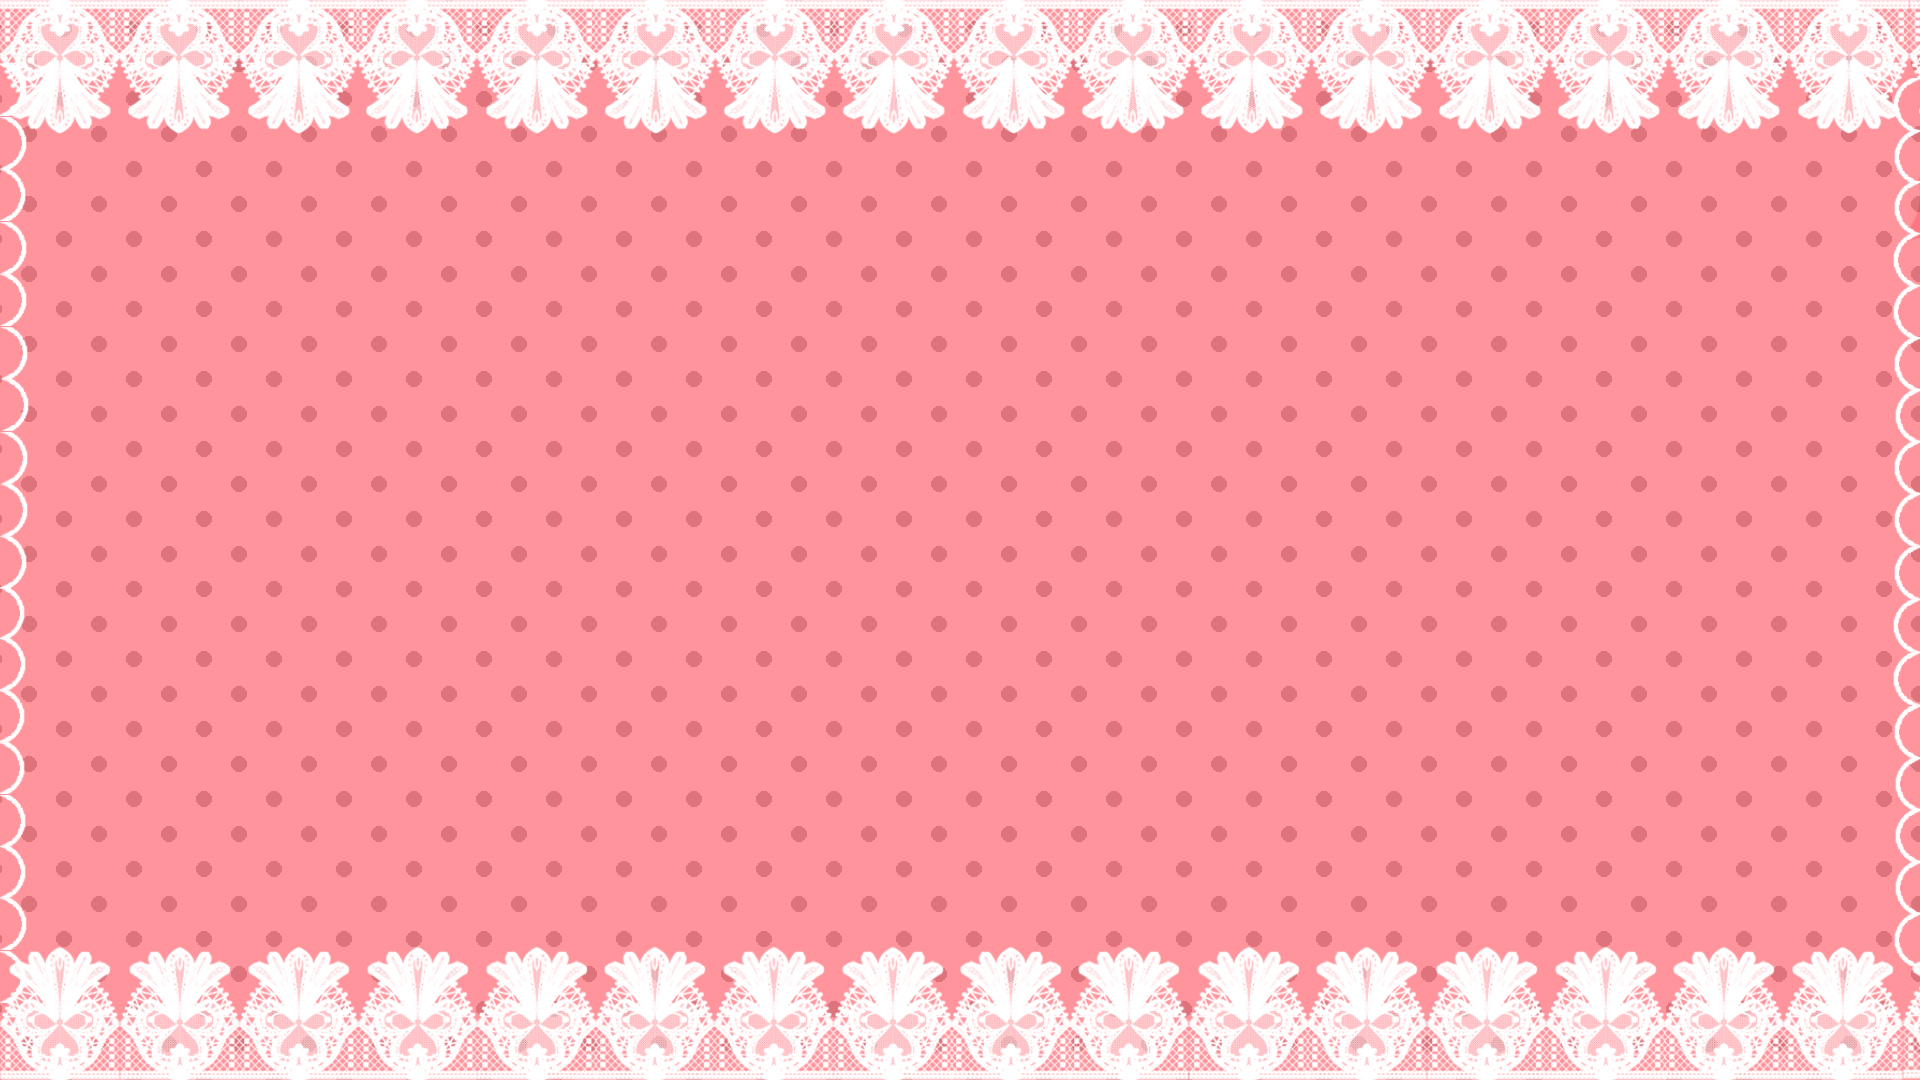 Polka Dots Hd Desktop Wallpaper High Definition Fullscreen 1920x1080px